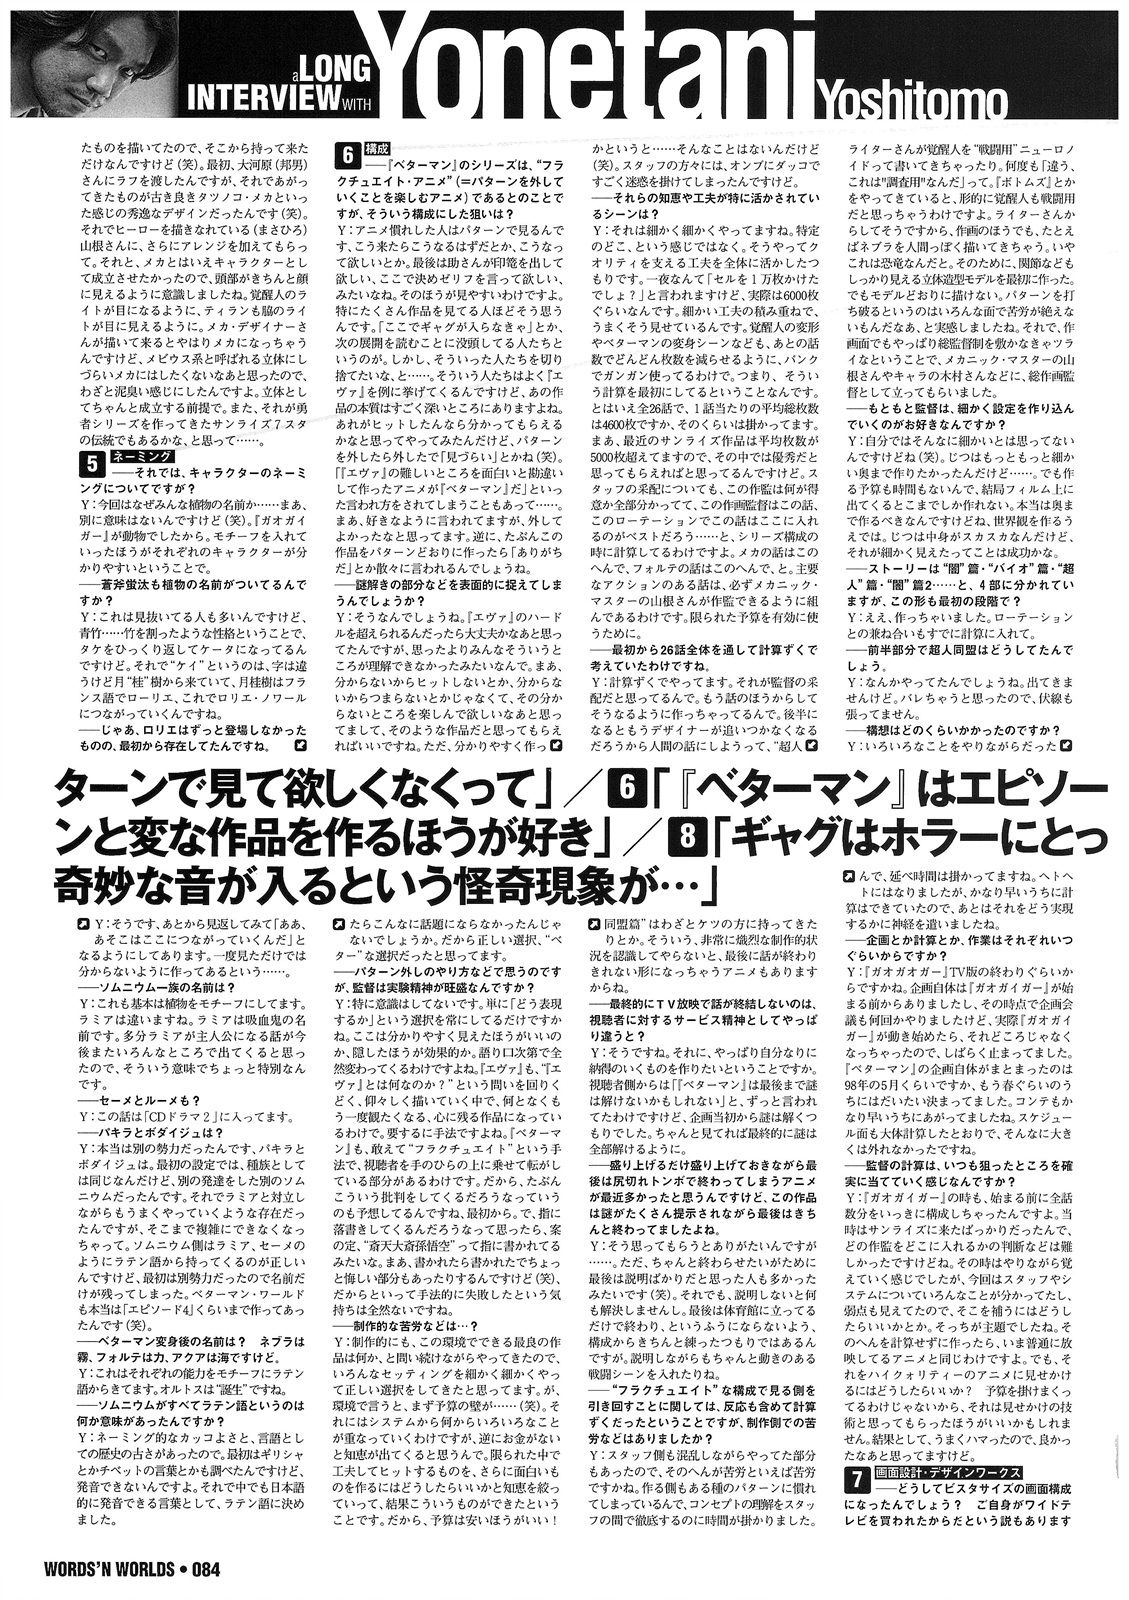 BETTERMAN COMPLETE BOOK 鑑-kagami- - 第02卷(2/3) - 6